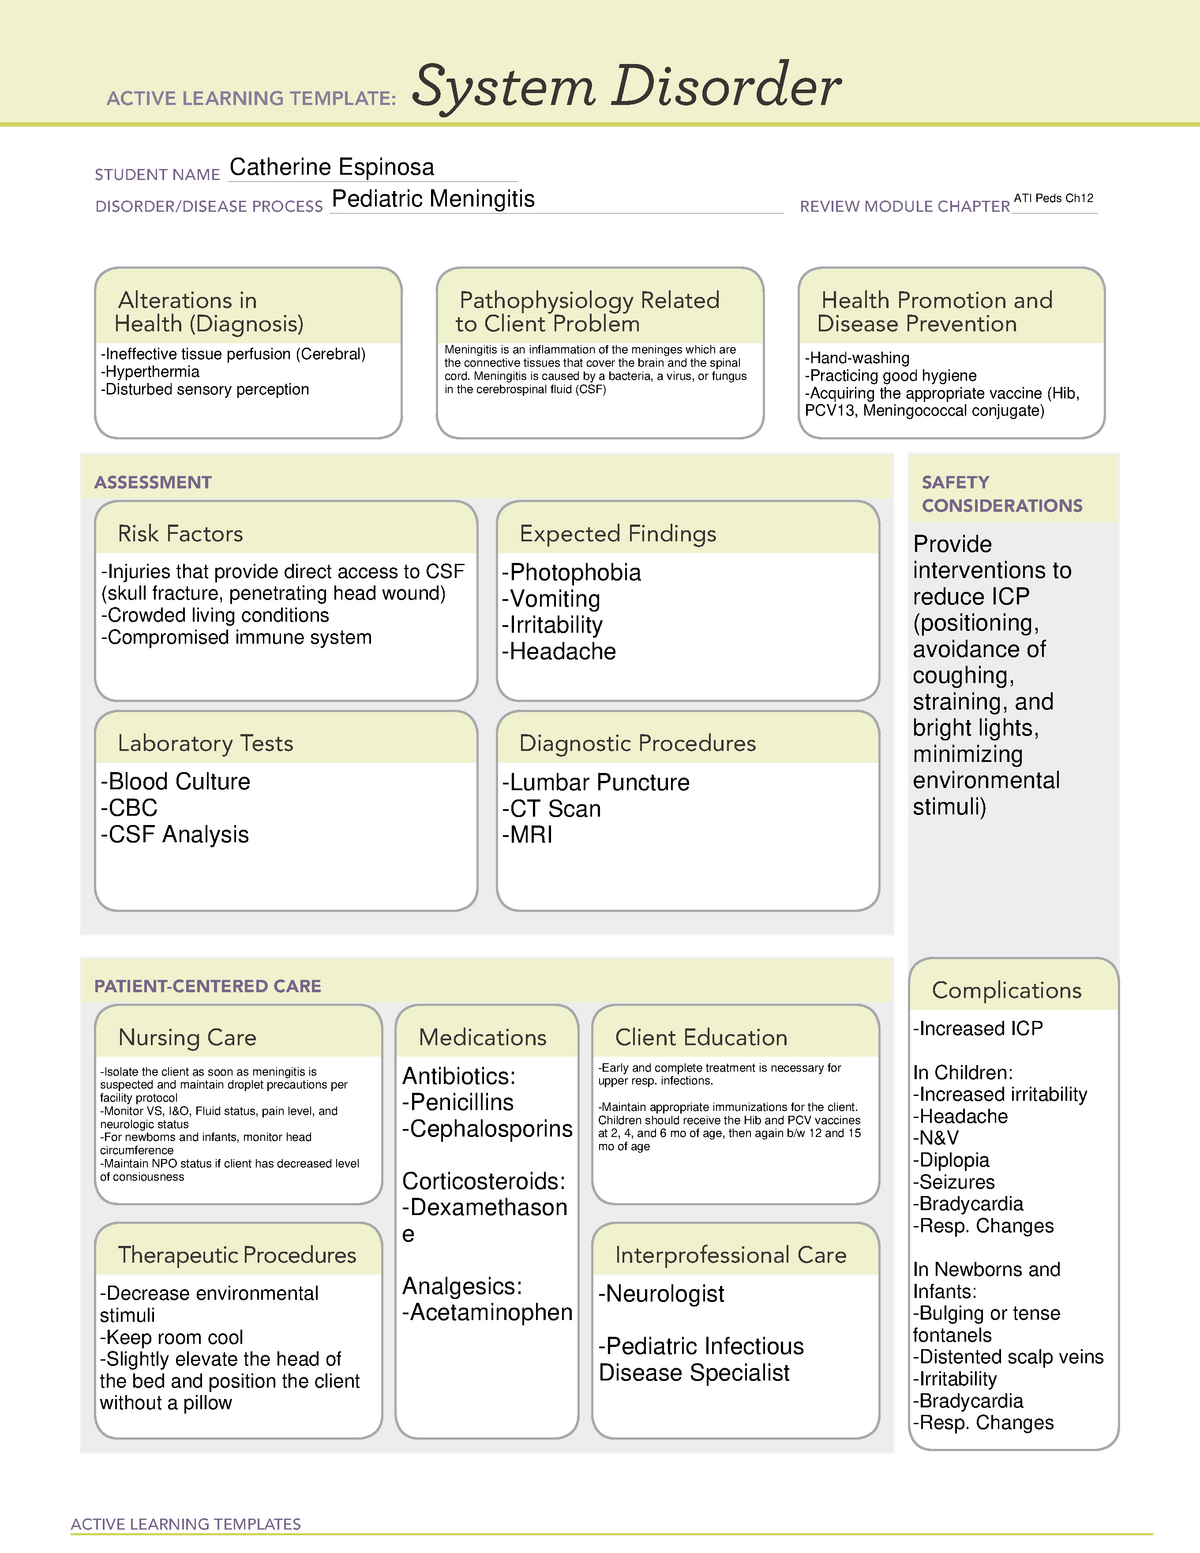 pediatric-meningitis-active-learning-templates-system-disorder